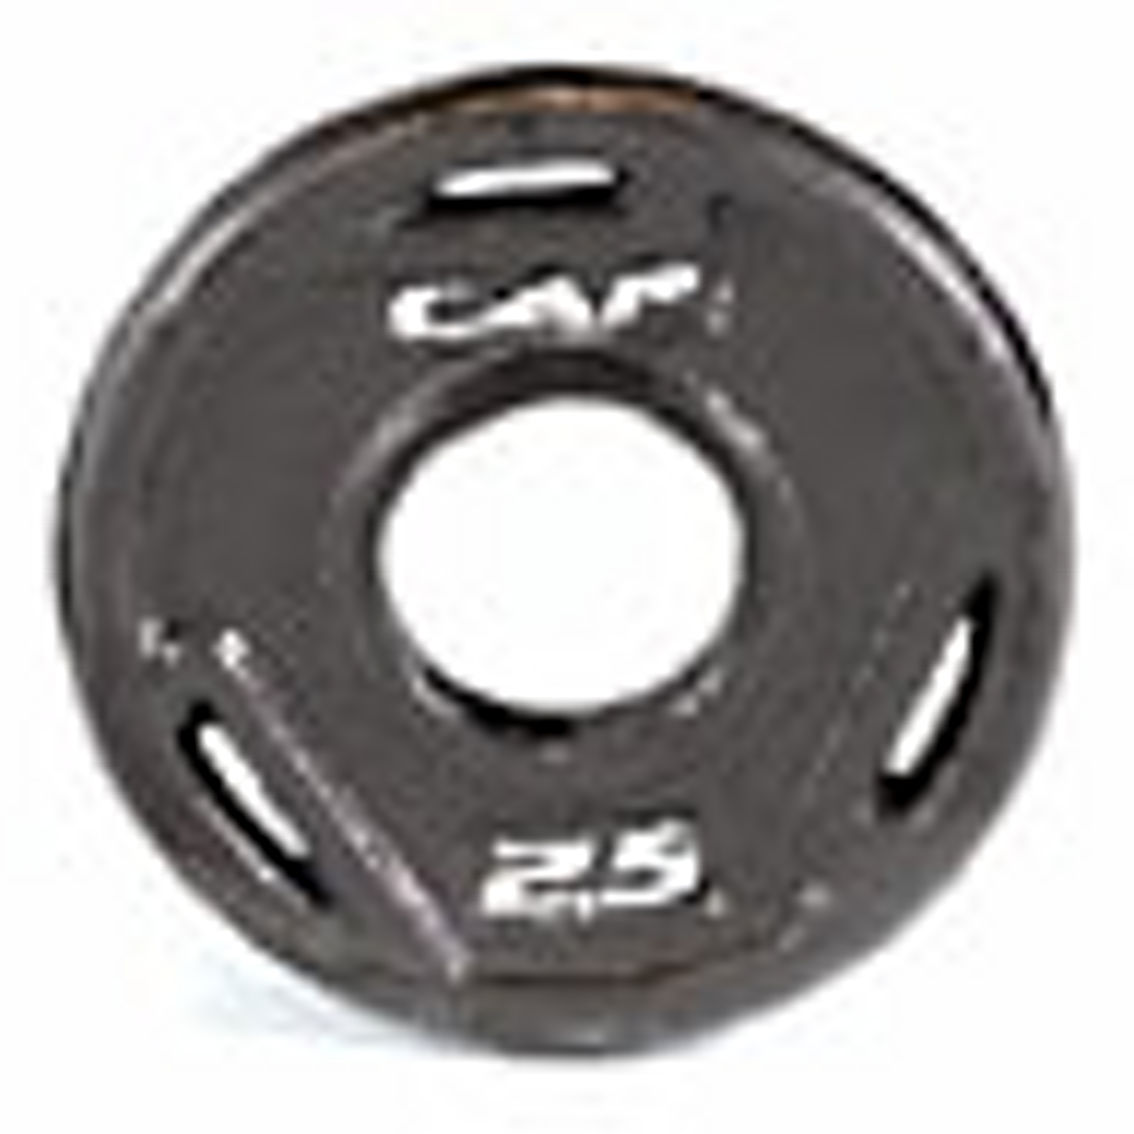 CAP 2.5 lb Black Olympic Grip Plate-.com - Image 2 of 2